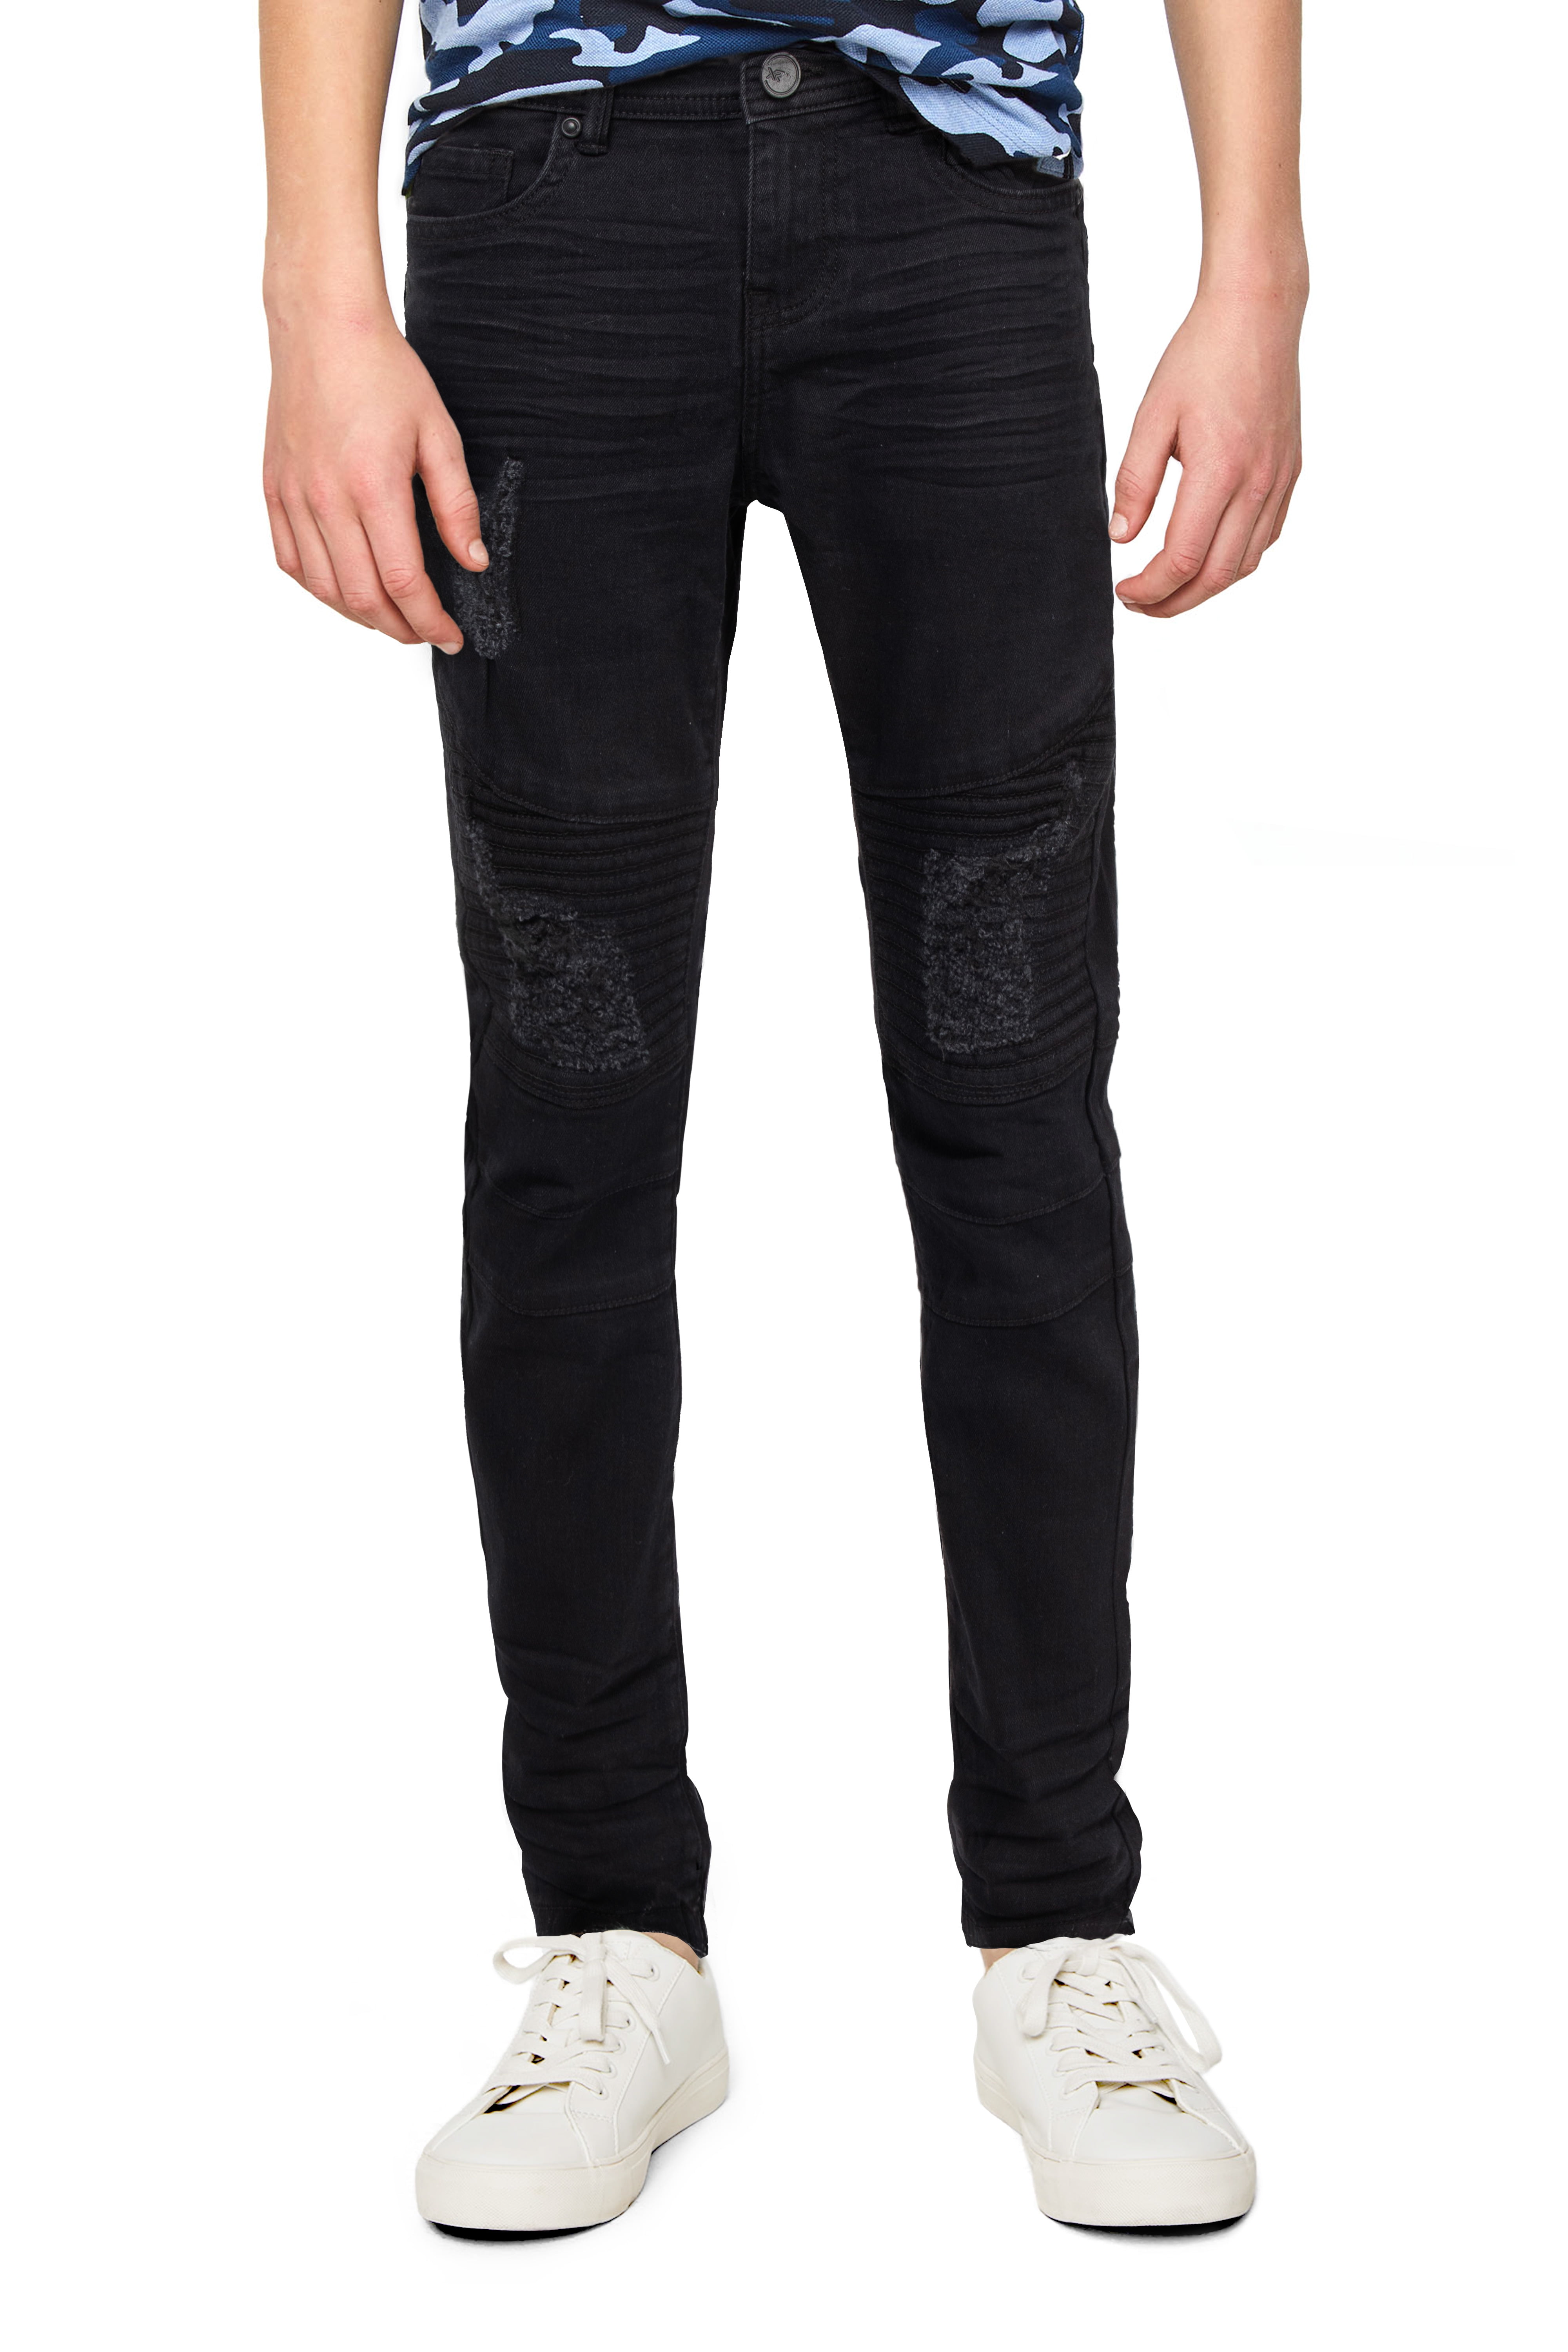 X RAY Slim Biker Pants for Big Boys Teen Distressed Moto Jeans, Black Size 16 - Walmart.com